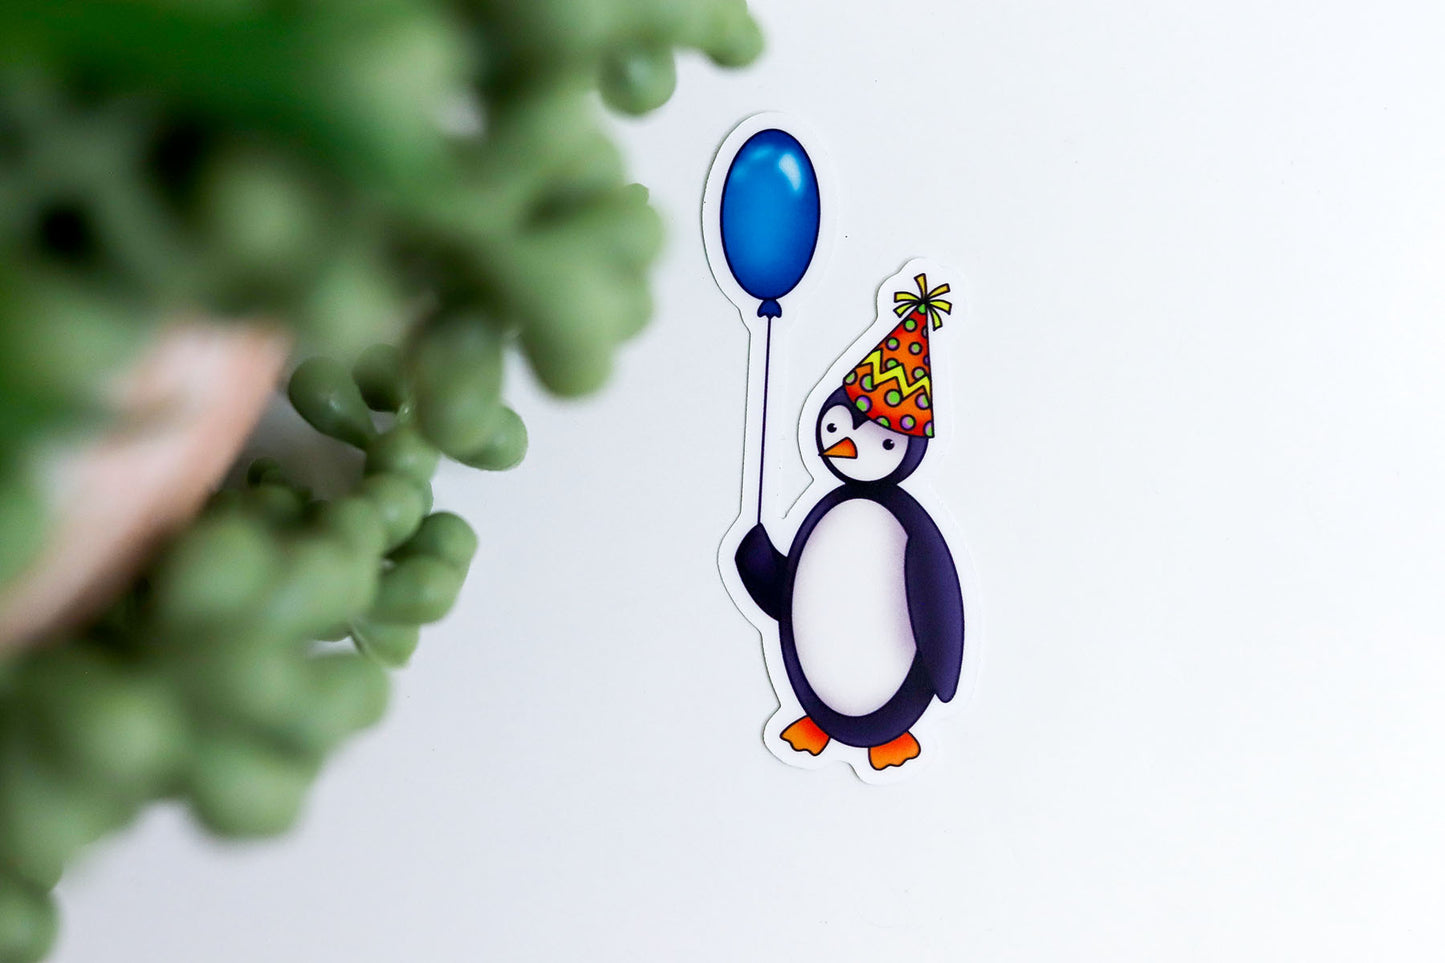 Party Penguin Sticker